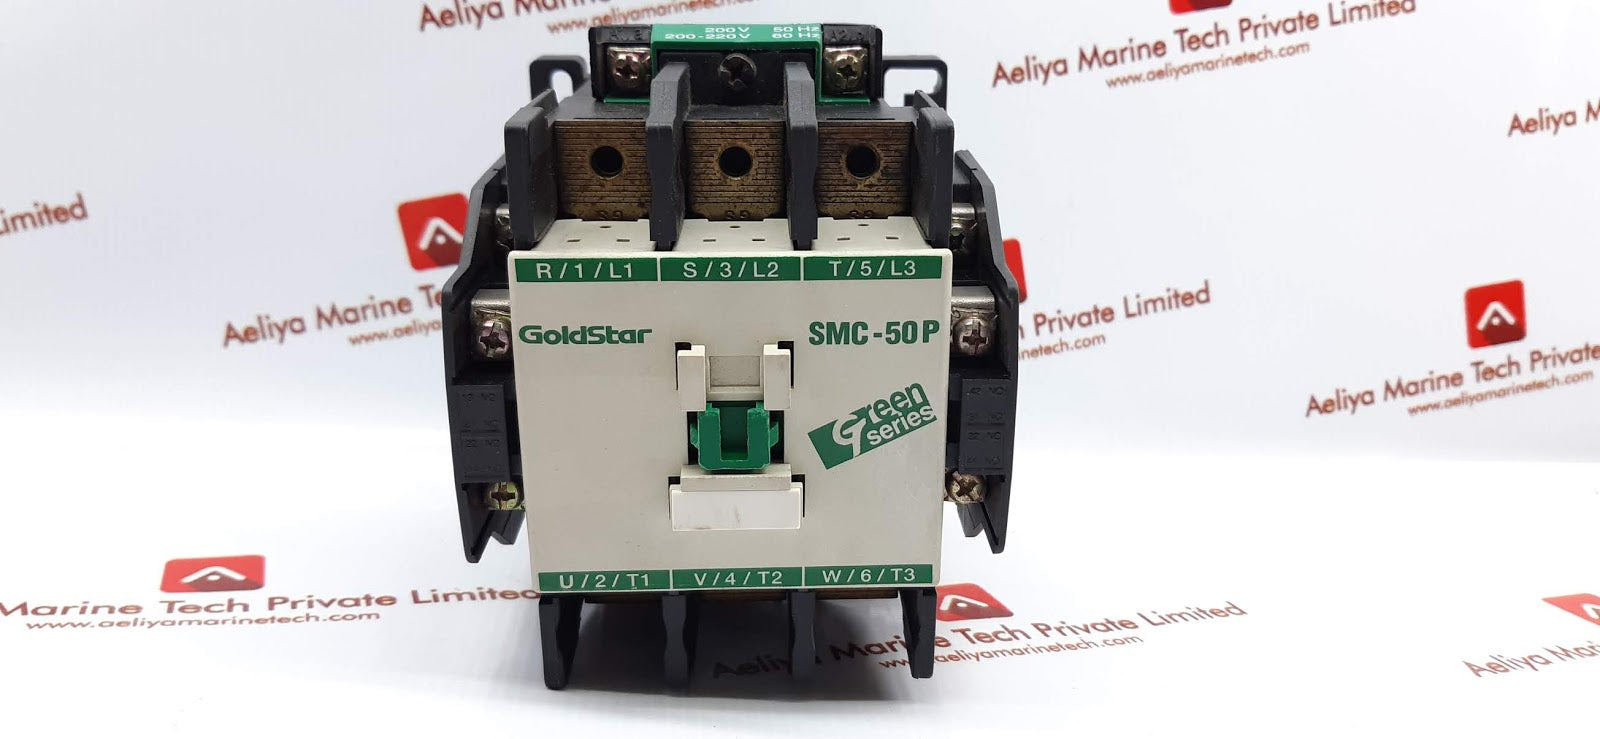 Goldstar smc-50p magnetic contactor